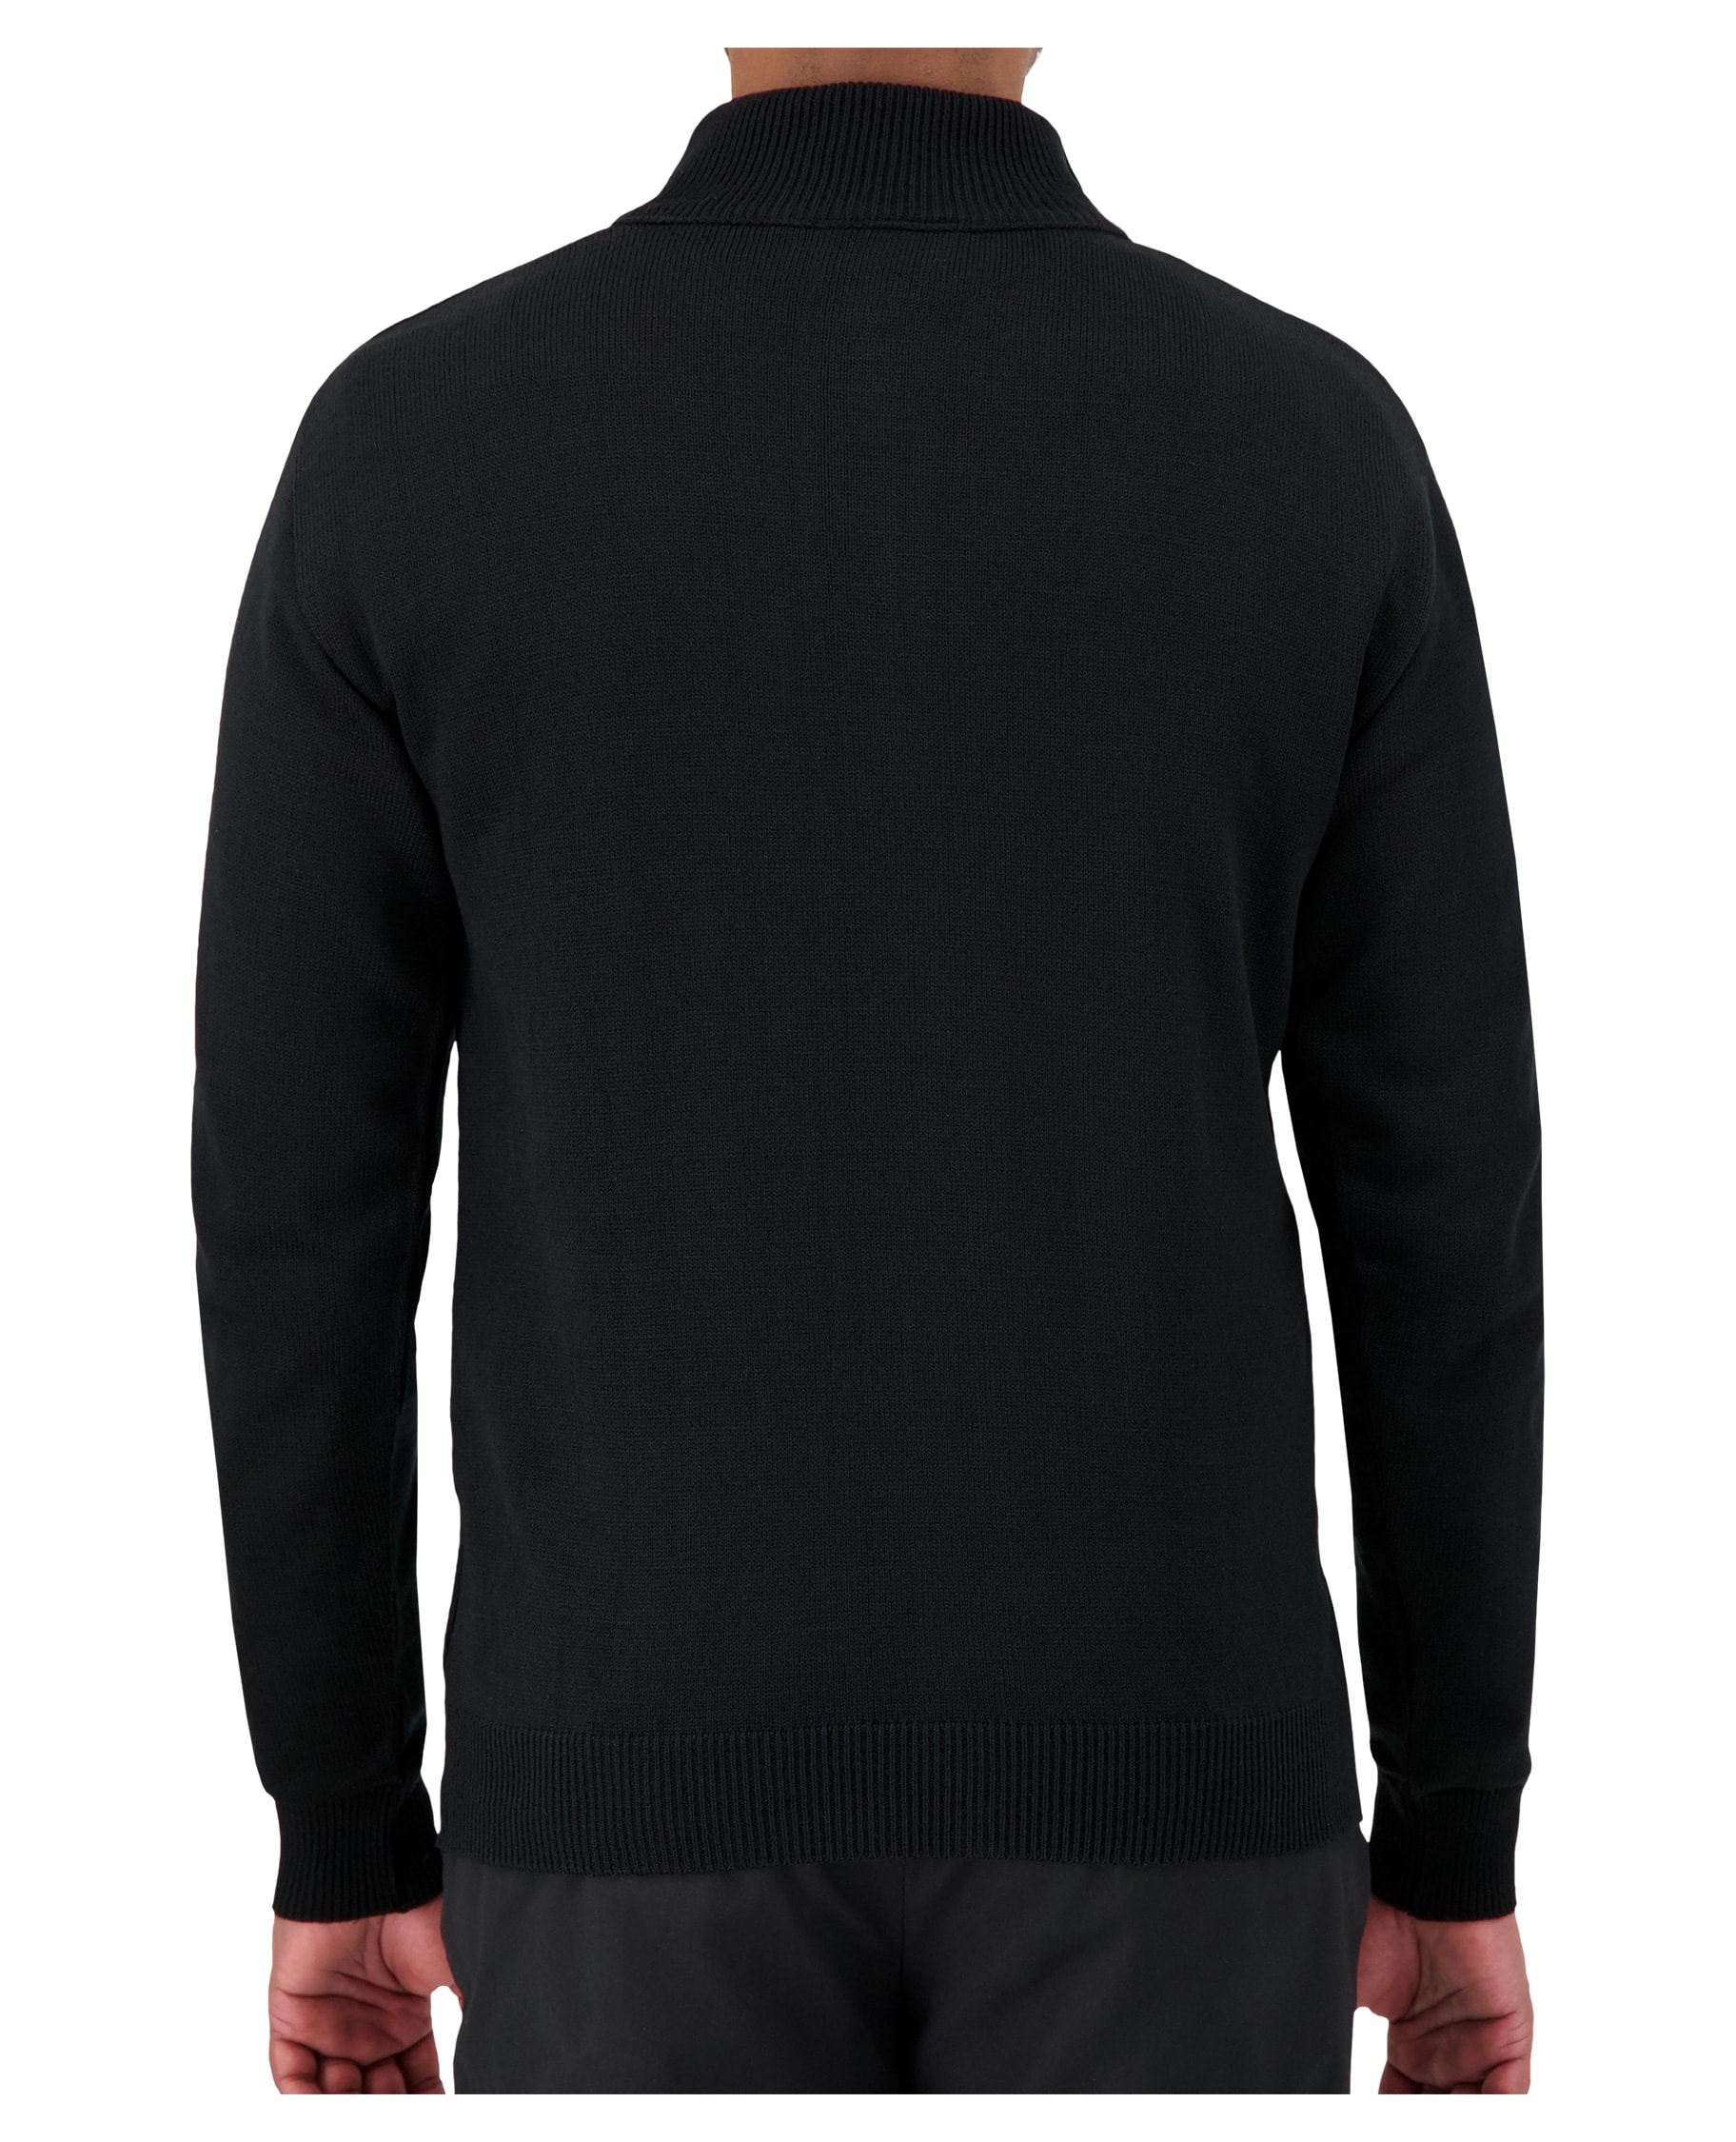 back of black quarter zip uniform sweater